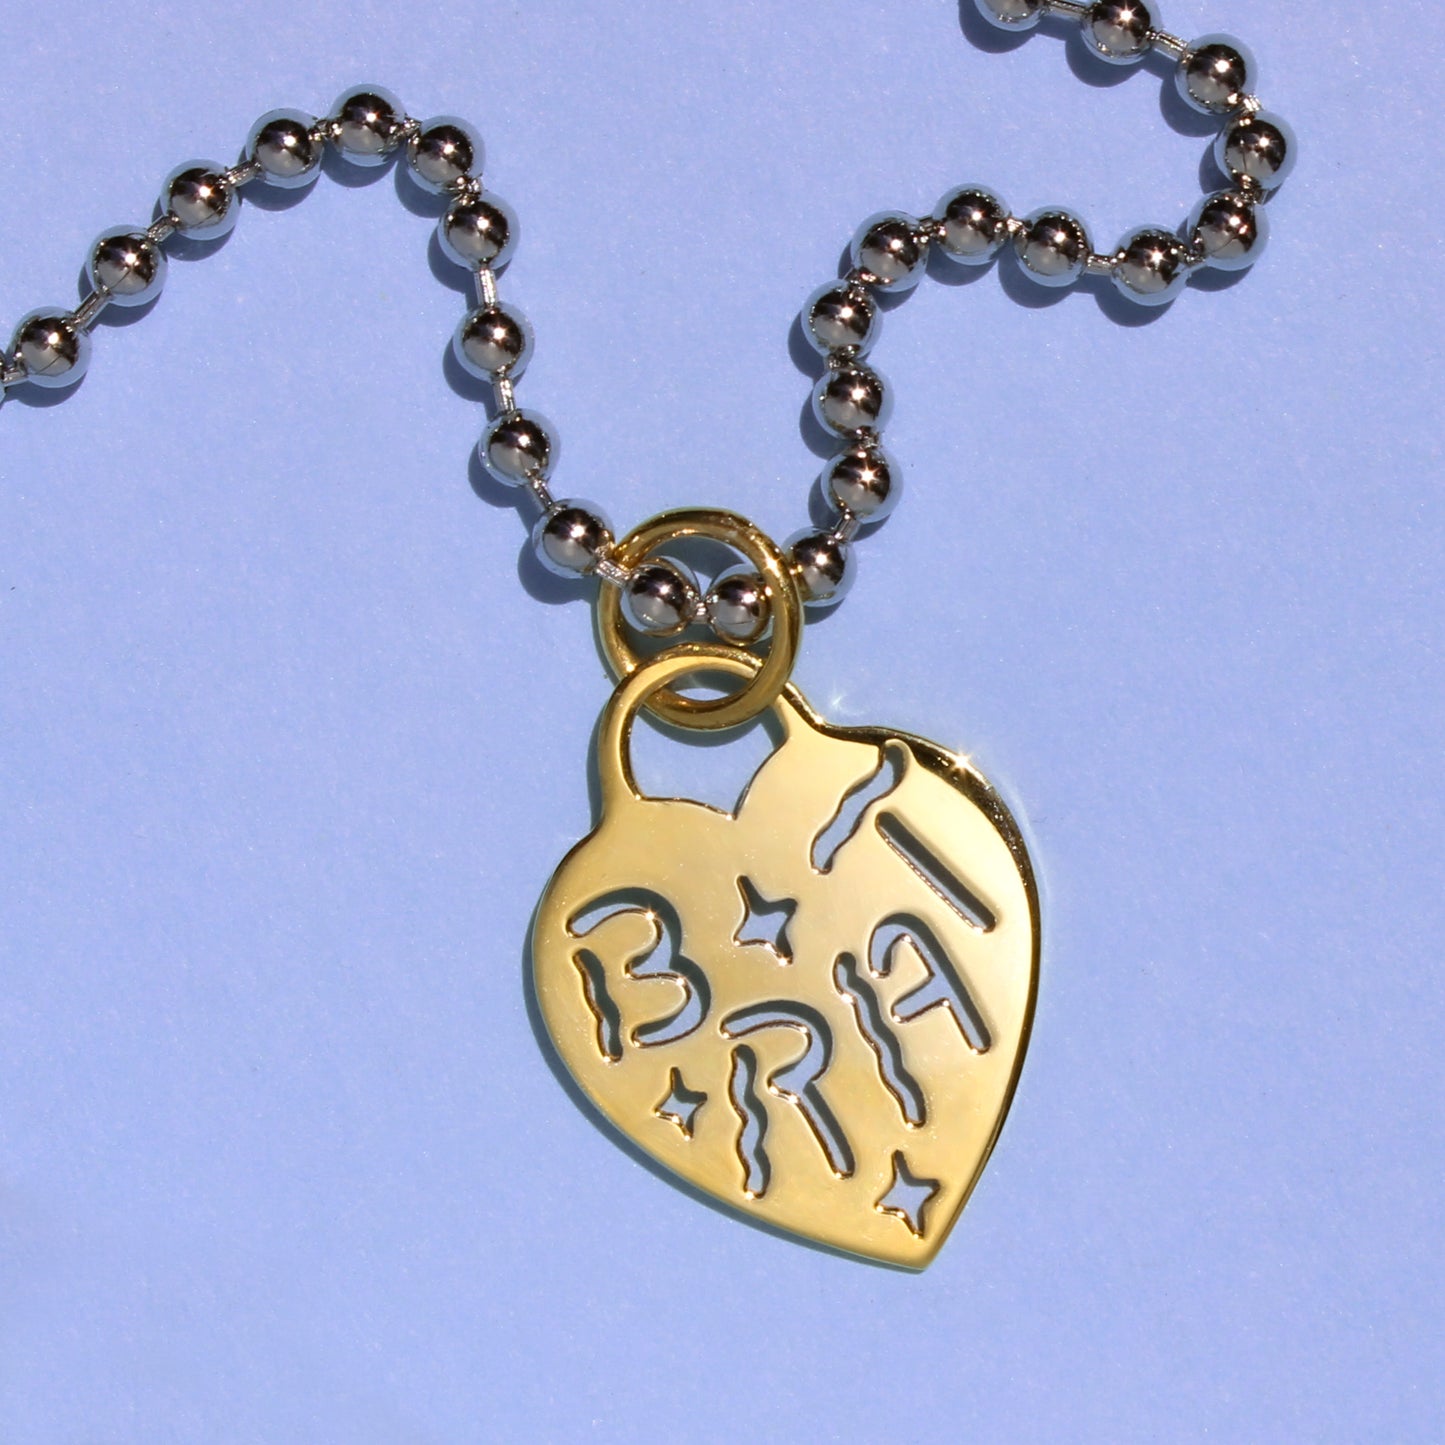 BRAT heart tag necklace